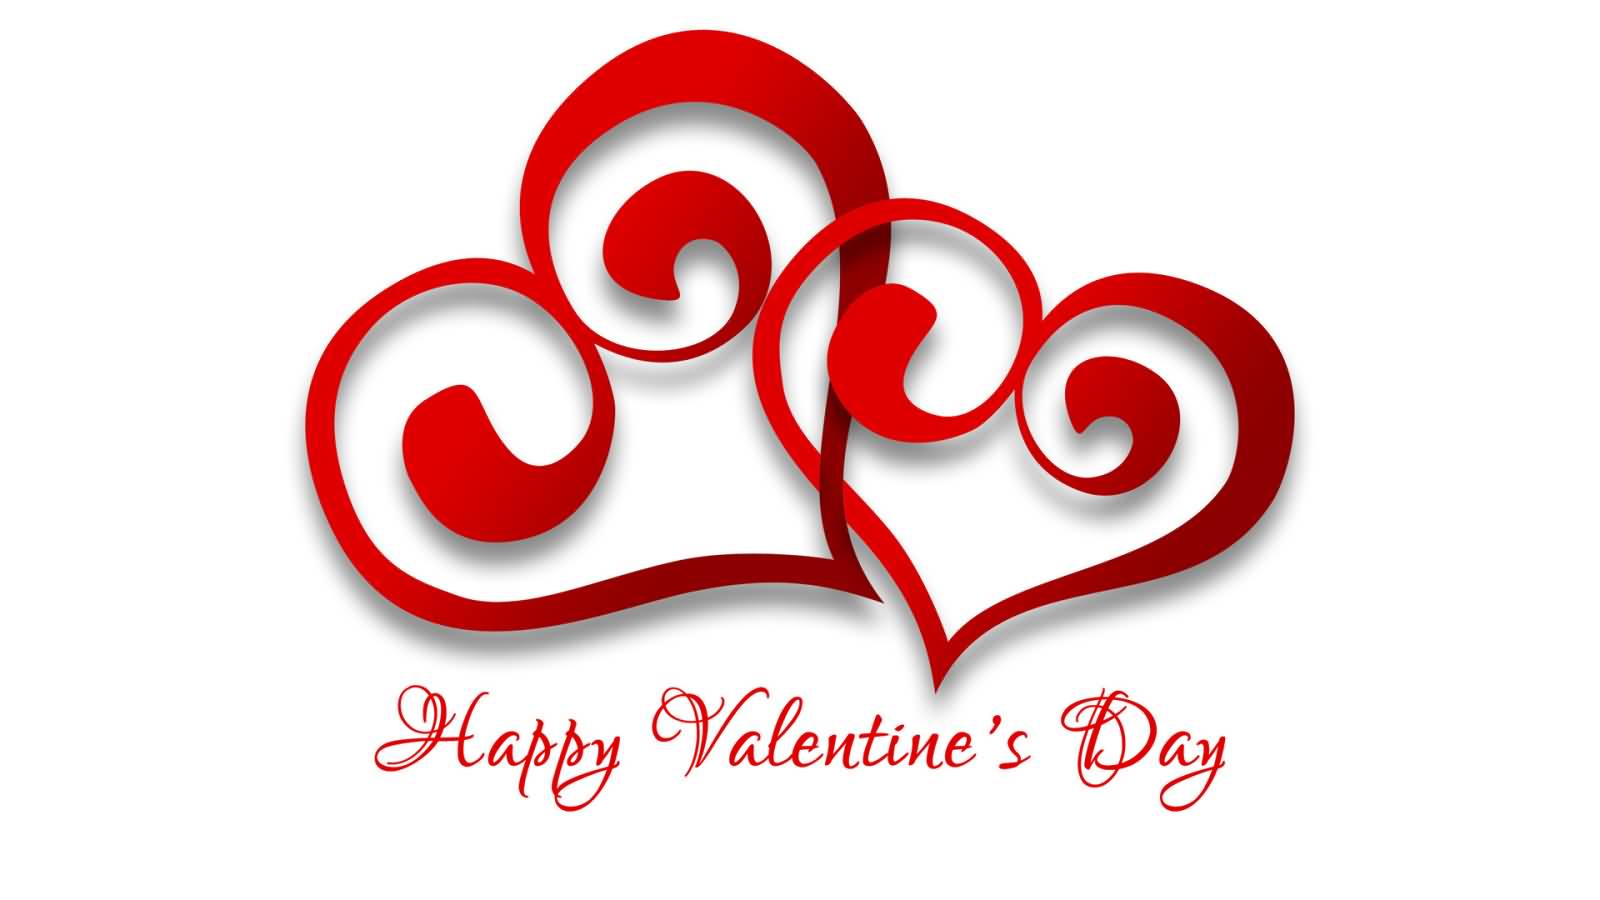 Happy Valentine’s Day Hearts Design